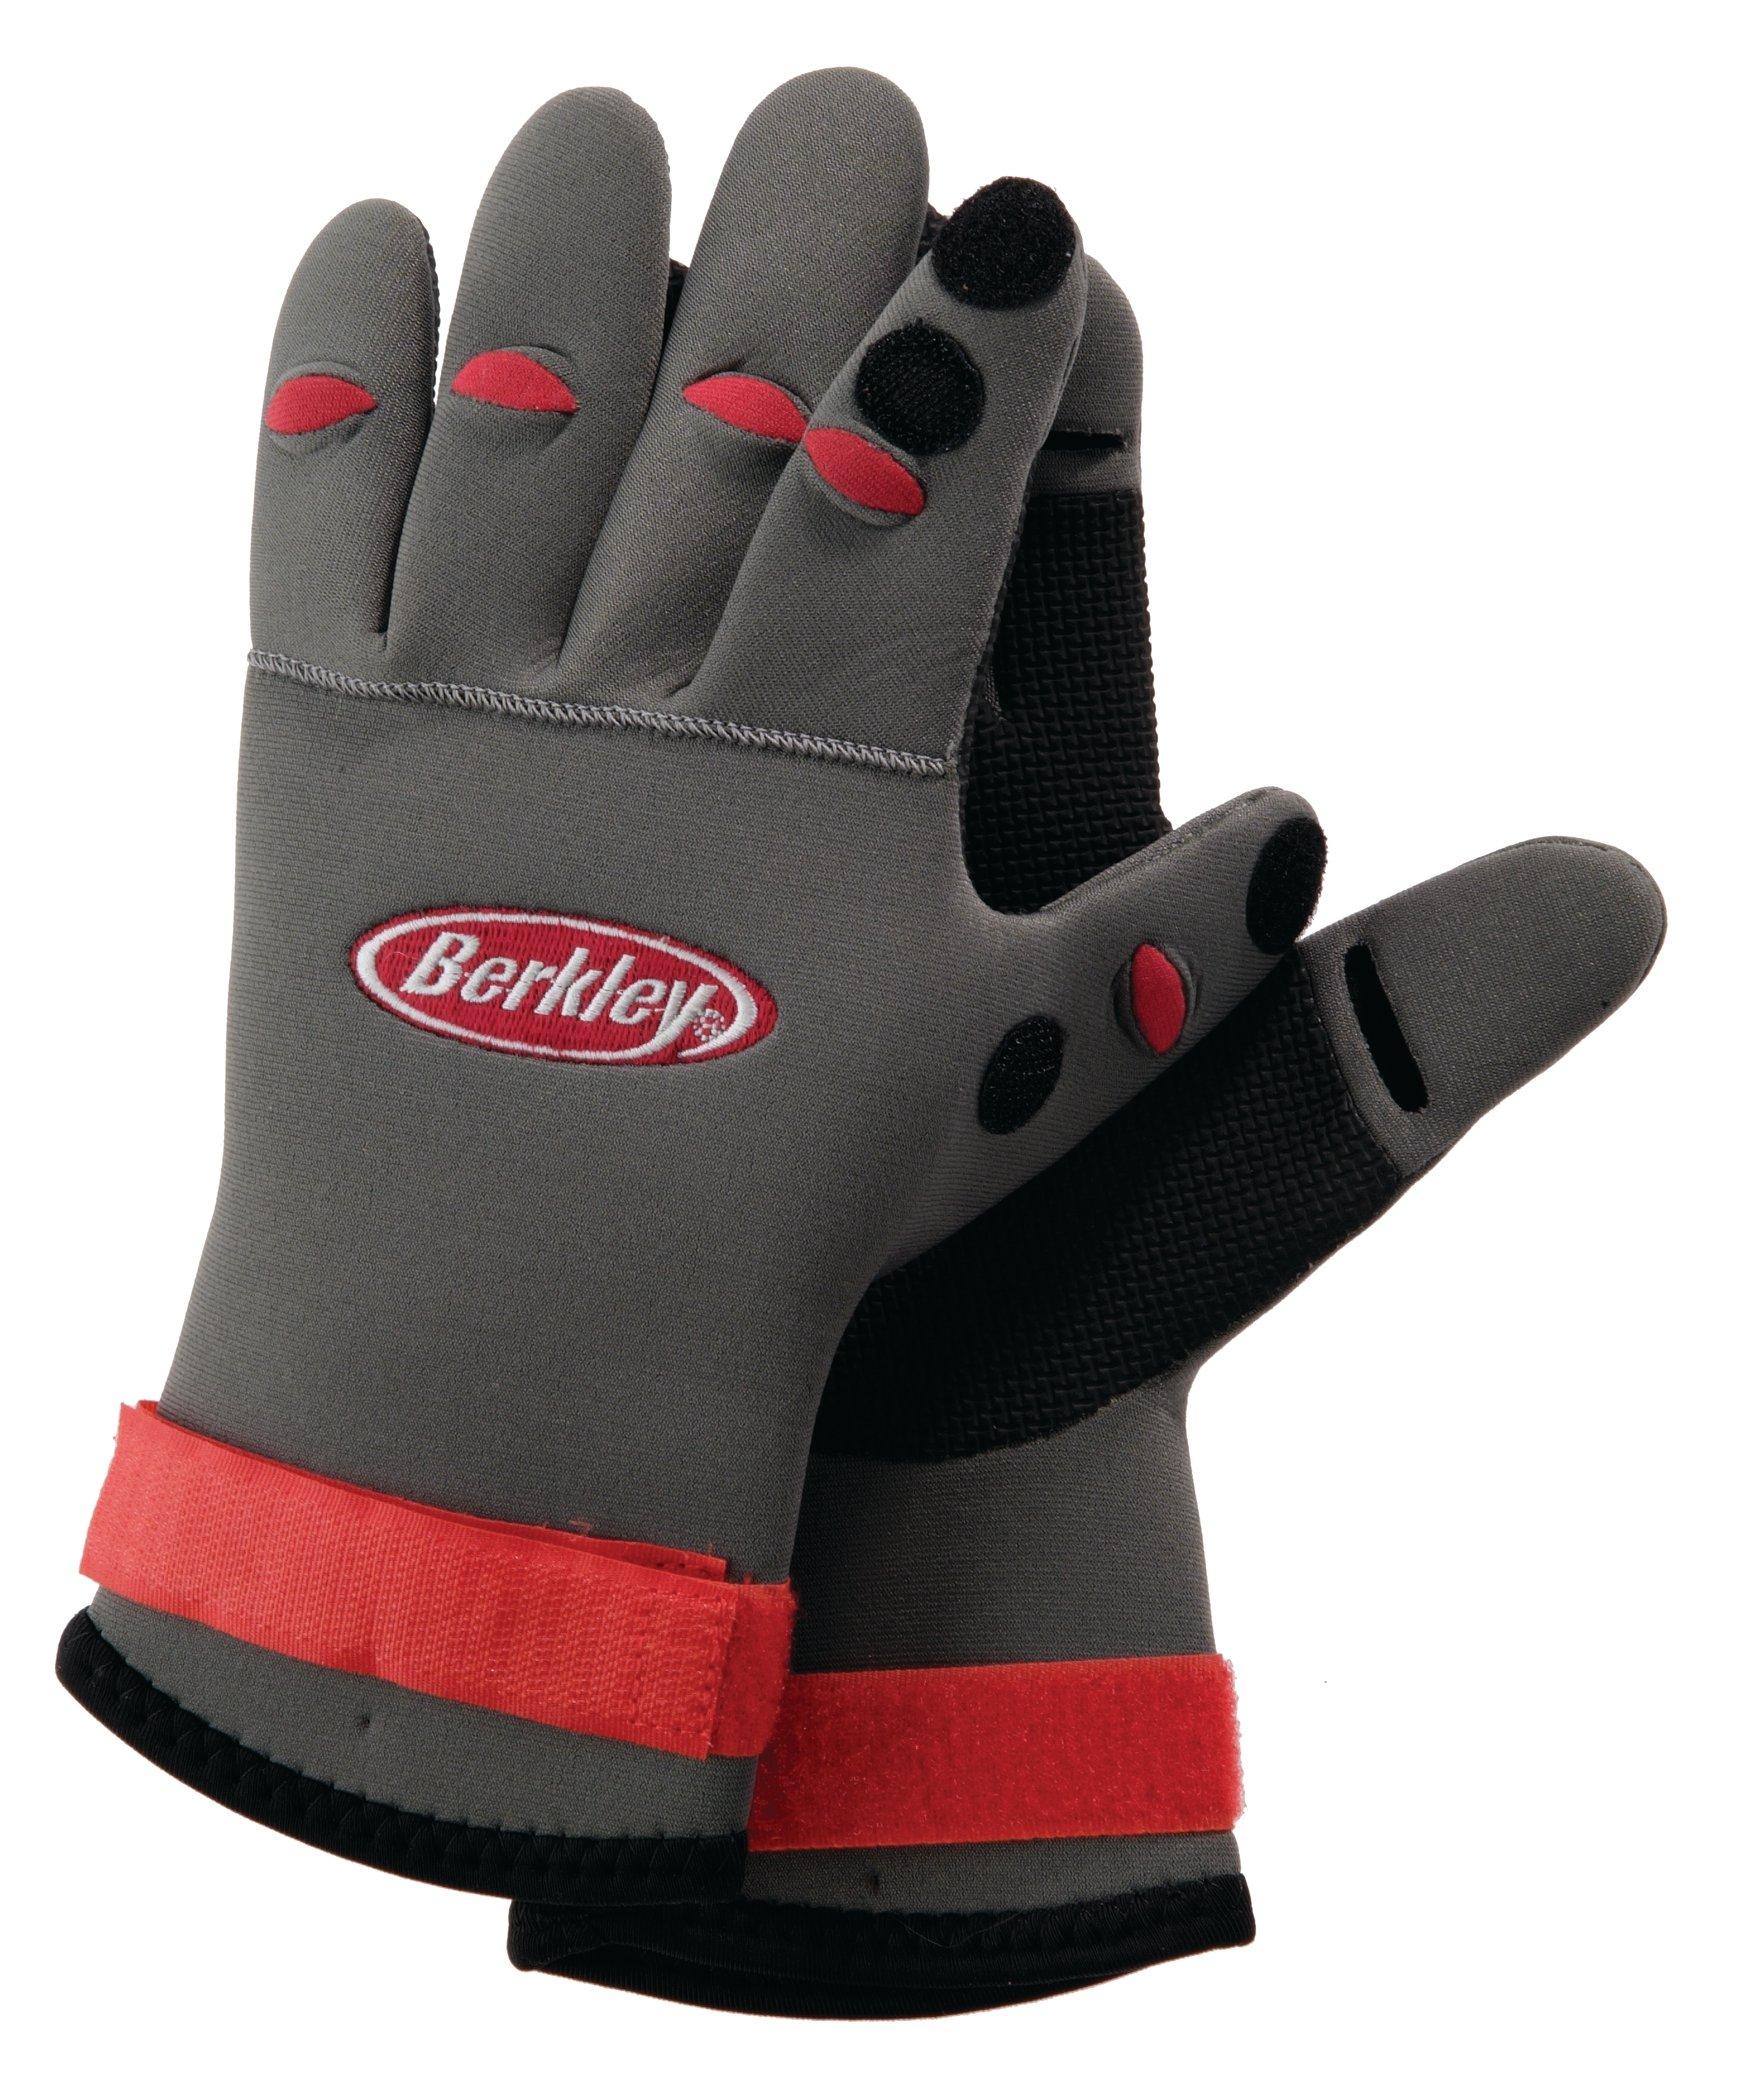 Berkley Coated Fishing Gloves by Anaconda for sale online